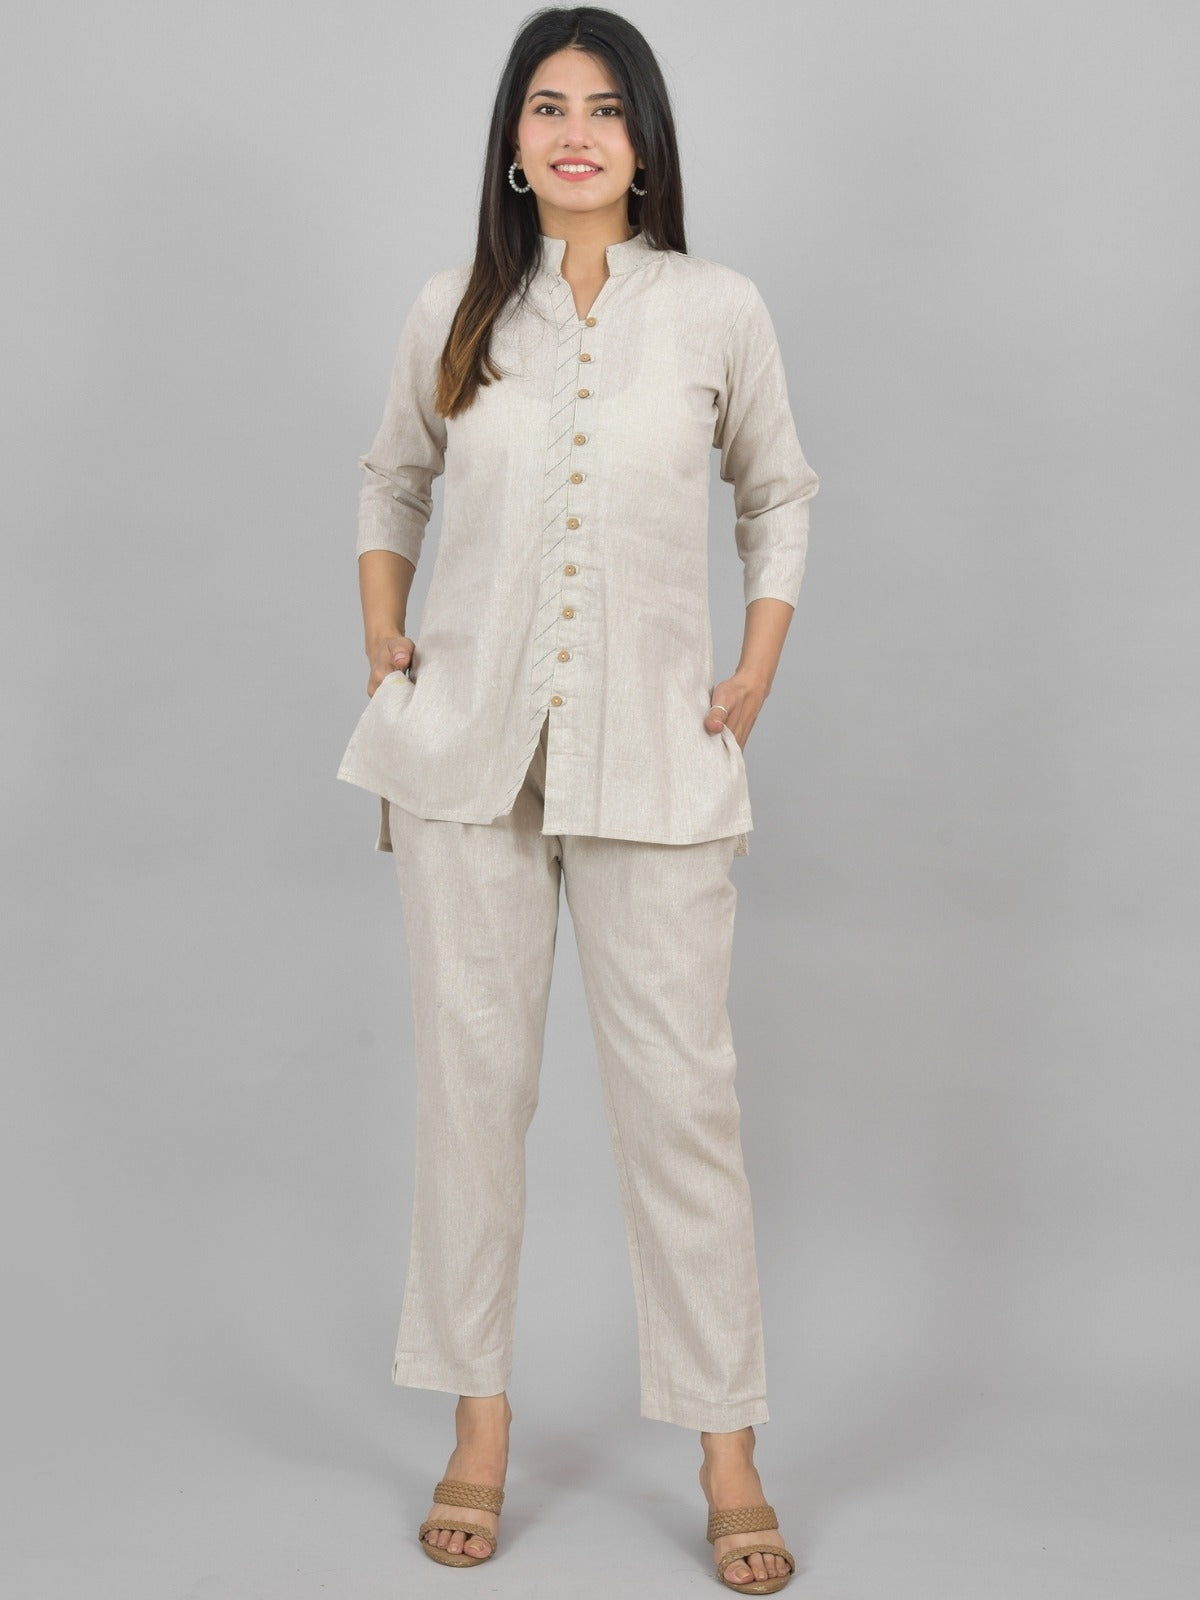 Quaclo Womens Solid Beige Cotton Top-Pyjama Co-Ords Set